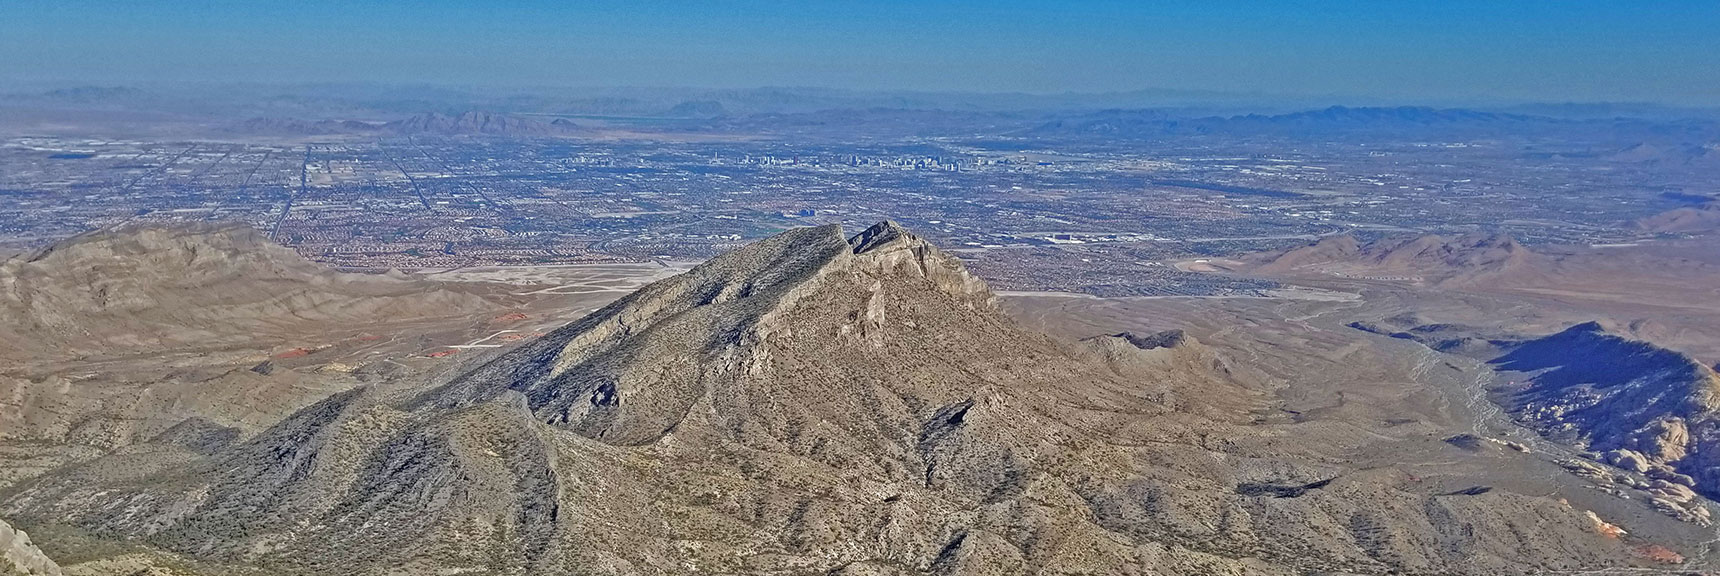 Damsel Peak with Las Vegas Valley in Background | La Madre Mountain,, El Padre Mountain, Burnt Peak | La Madre Mountains Wilderness, Nevada